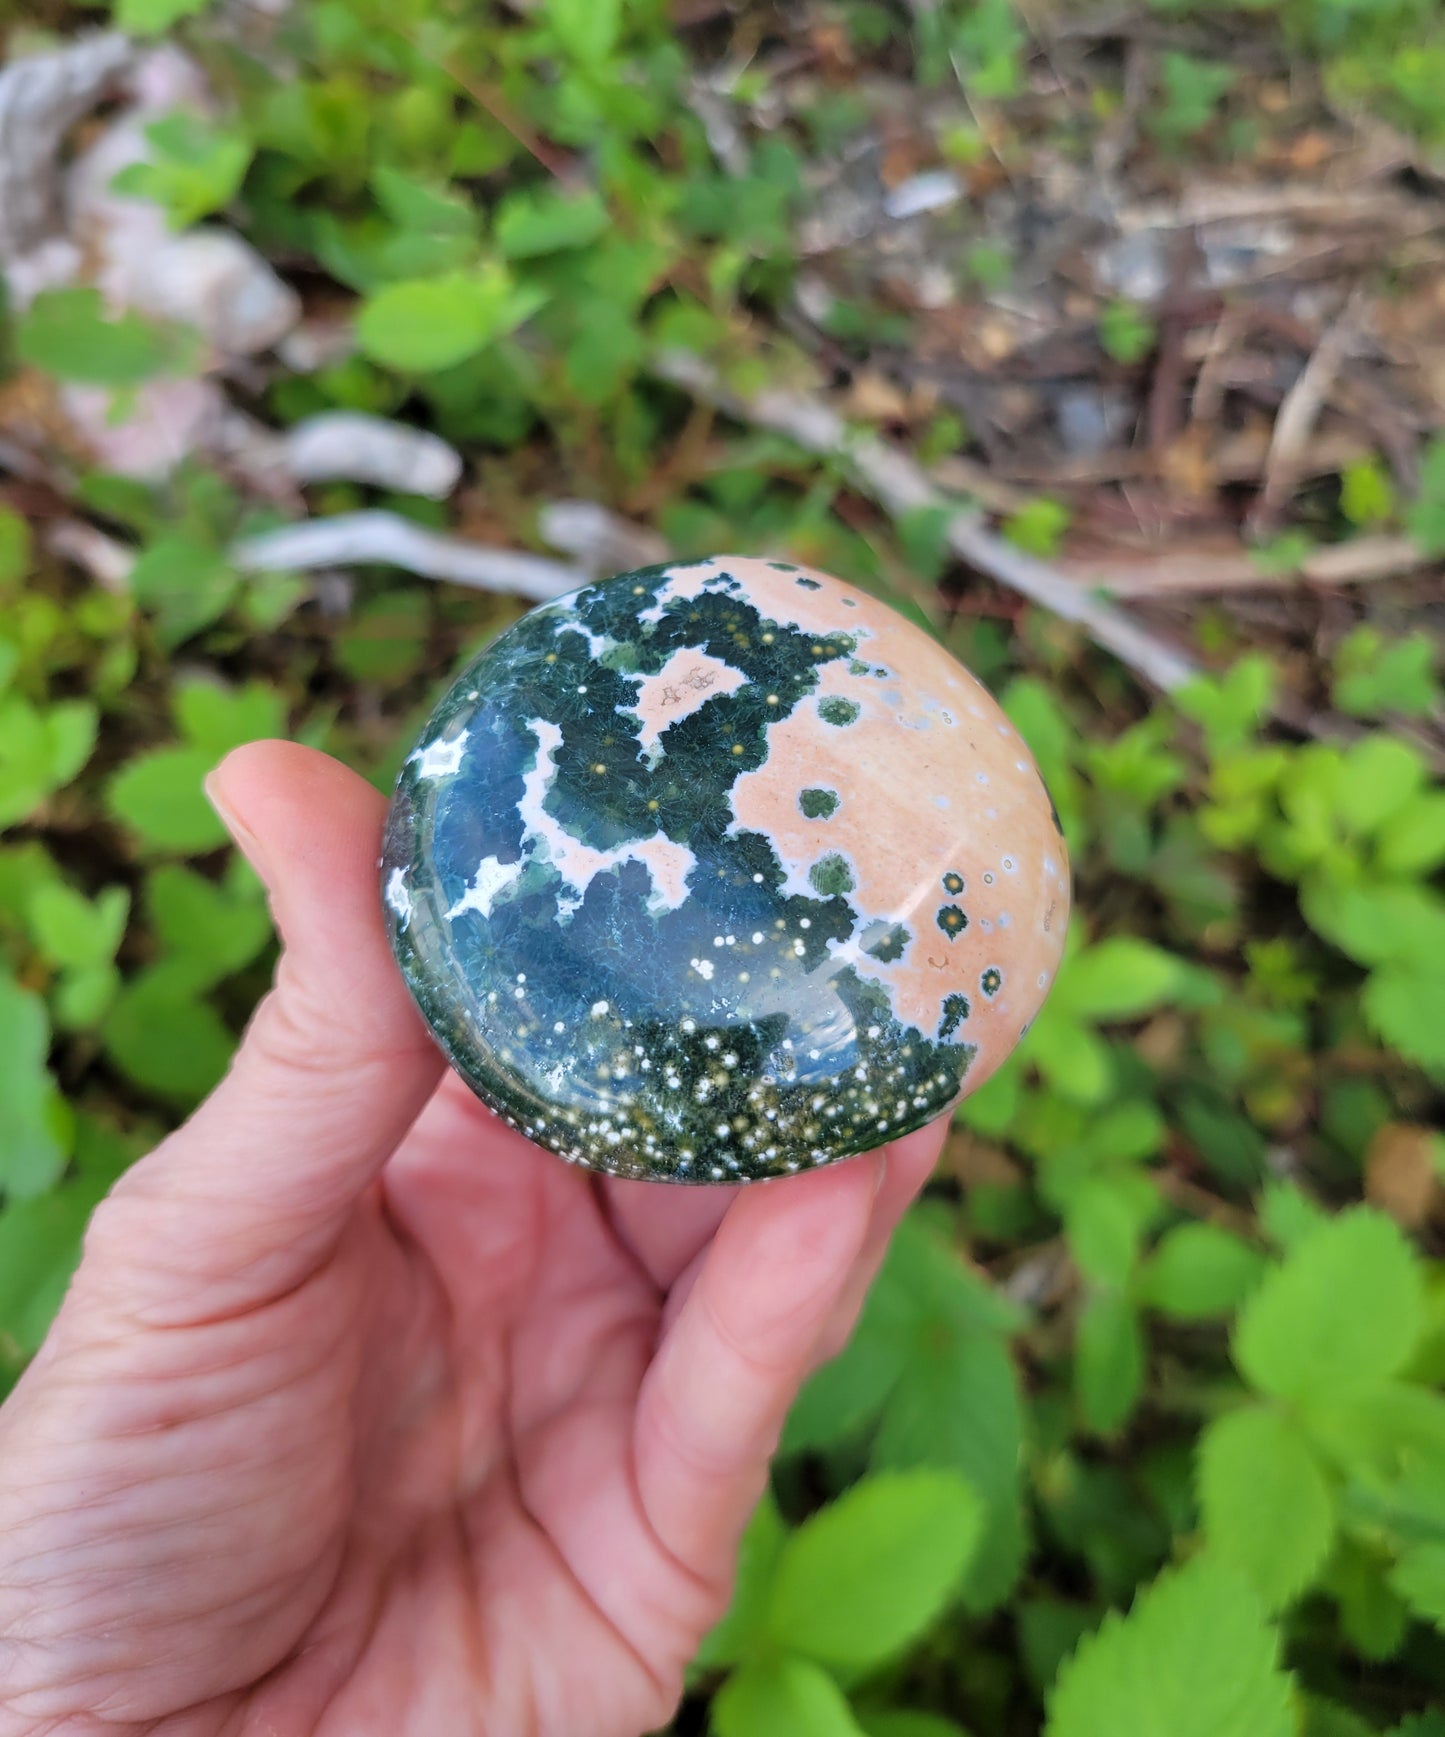 Ocean Jasper Palm Stone from Madagascar